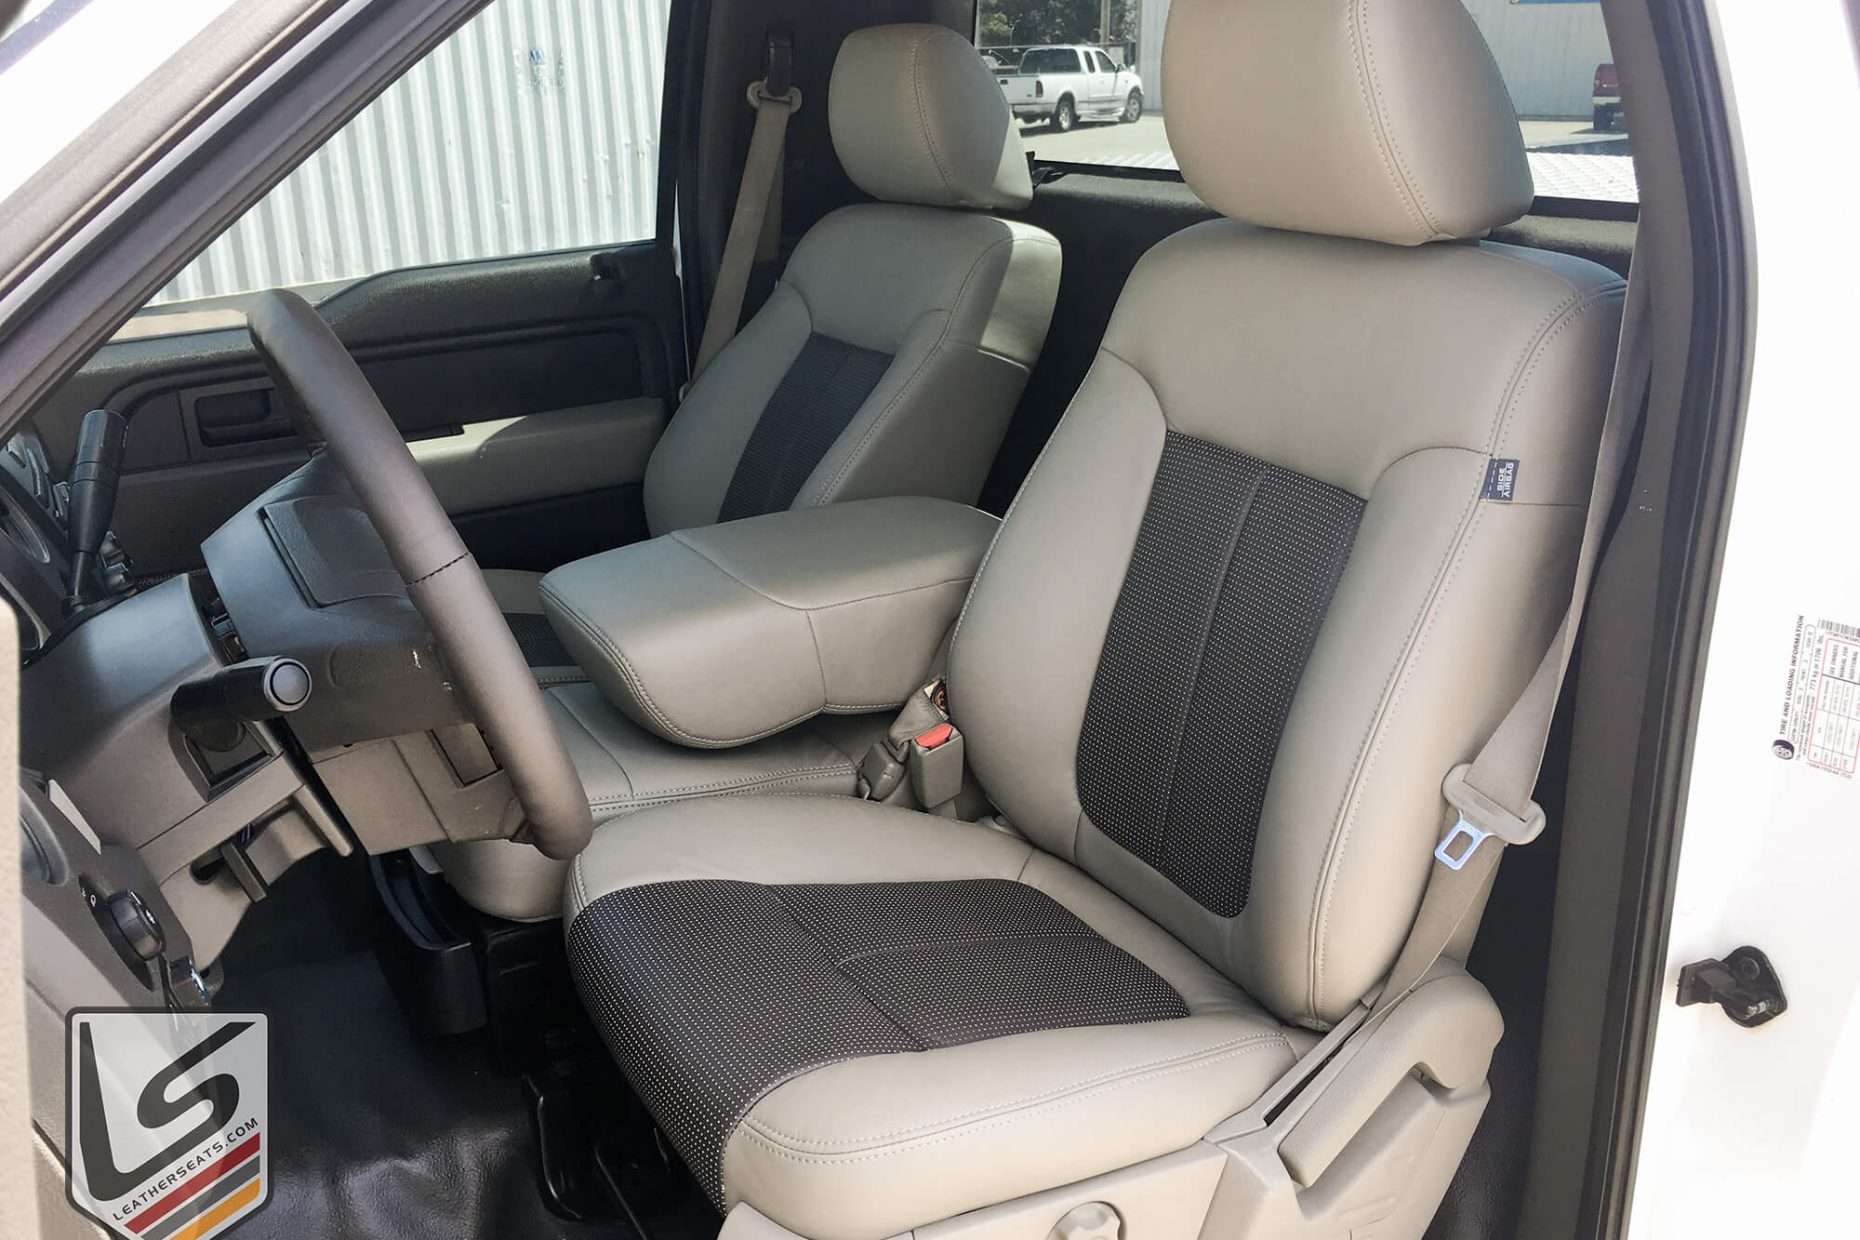 Ford F-150 Regular Cab with custom leather seats - Slate/Piazza JAva